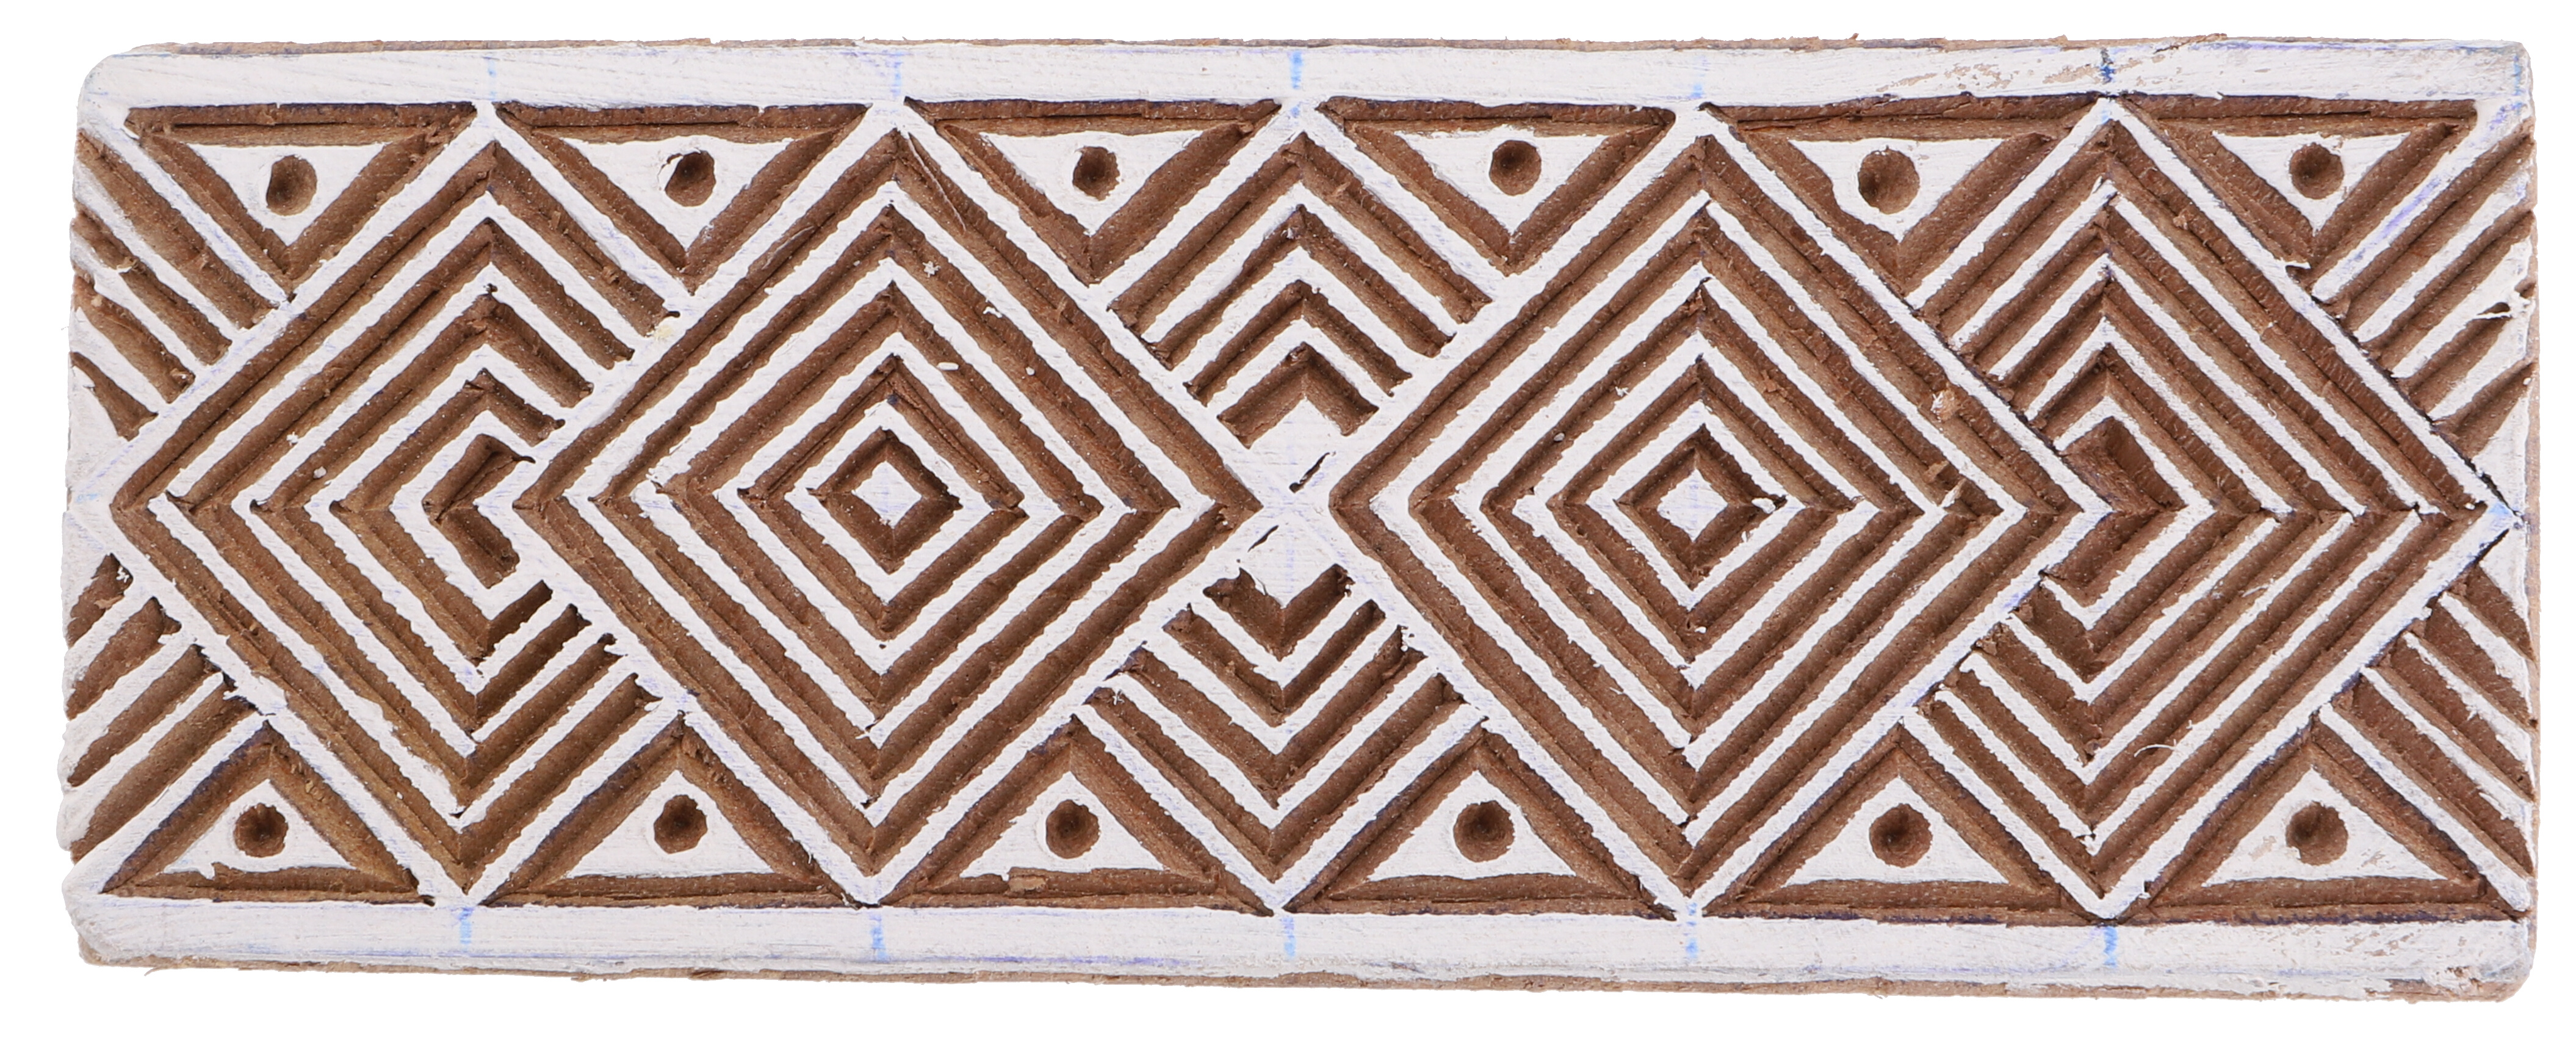 Fisch Stempel Holz Stempel Indischen Handdruck Block Textil-Stempel Sehnte